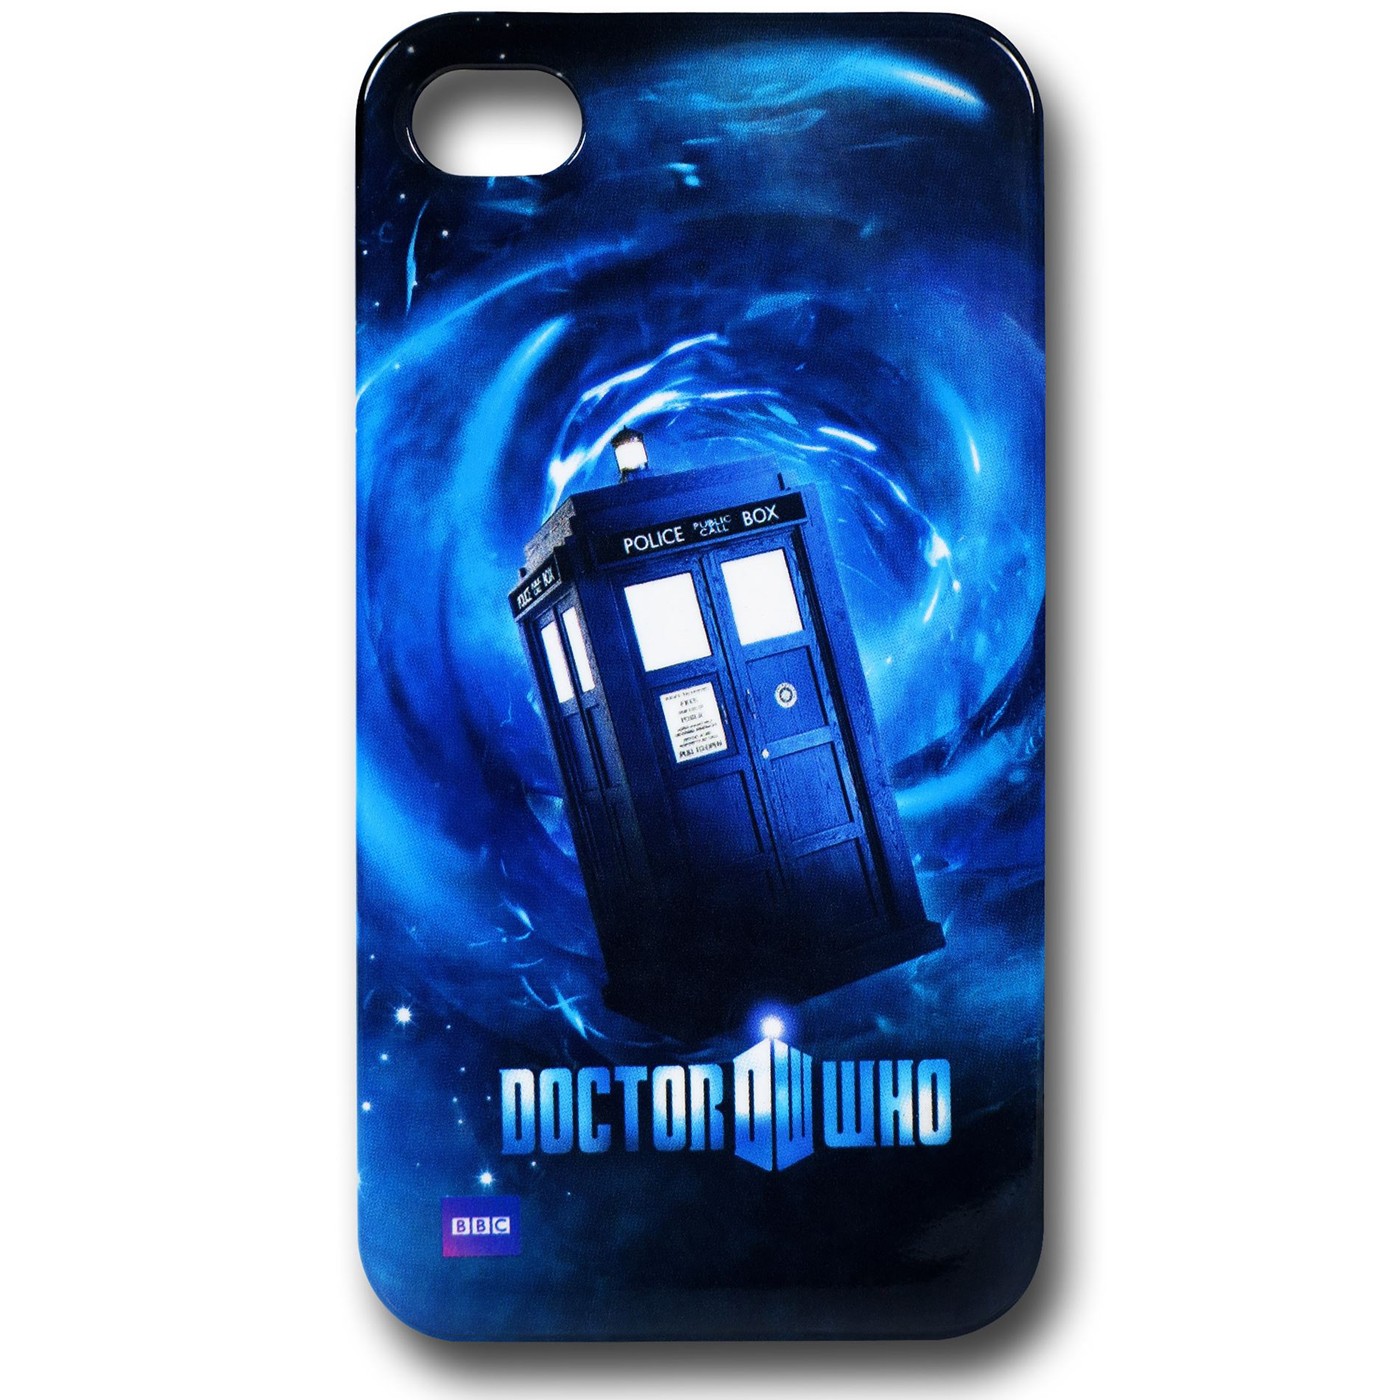 Doctor Who Tardis iPhone 4 Case